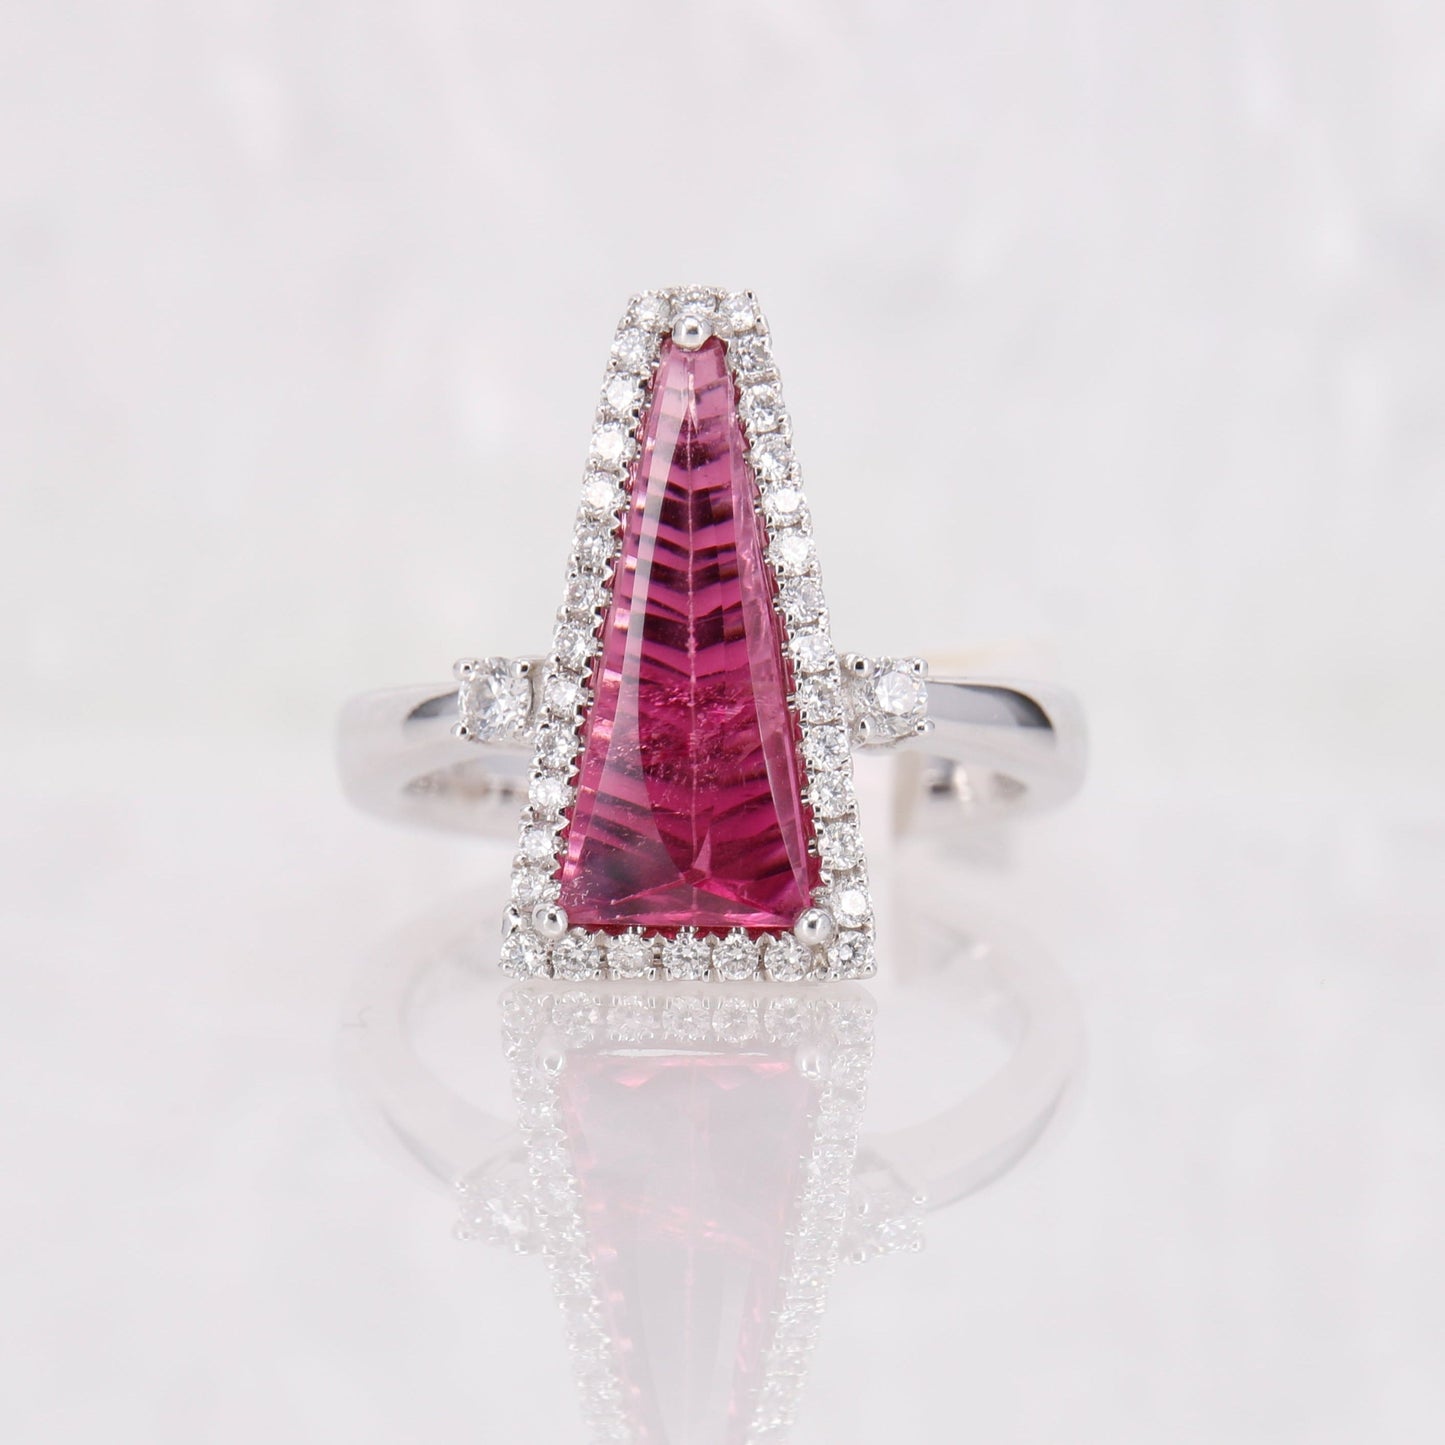 18ct white gold pink tourmaline and diamond ring. Faceted bright pink tourmaline and diamond ring. 